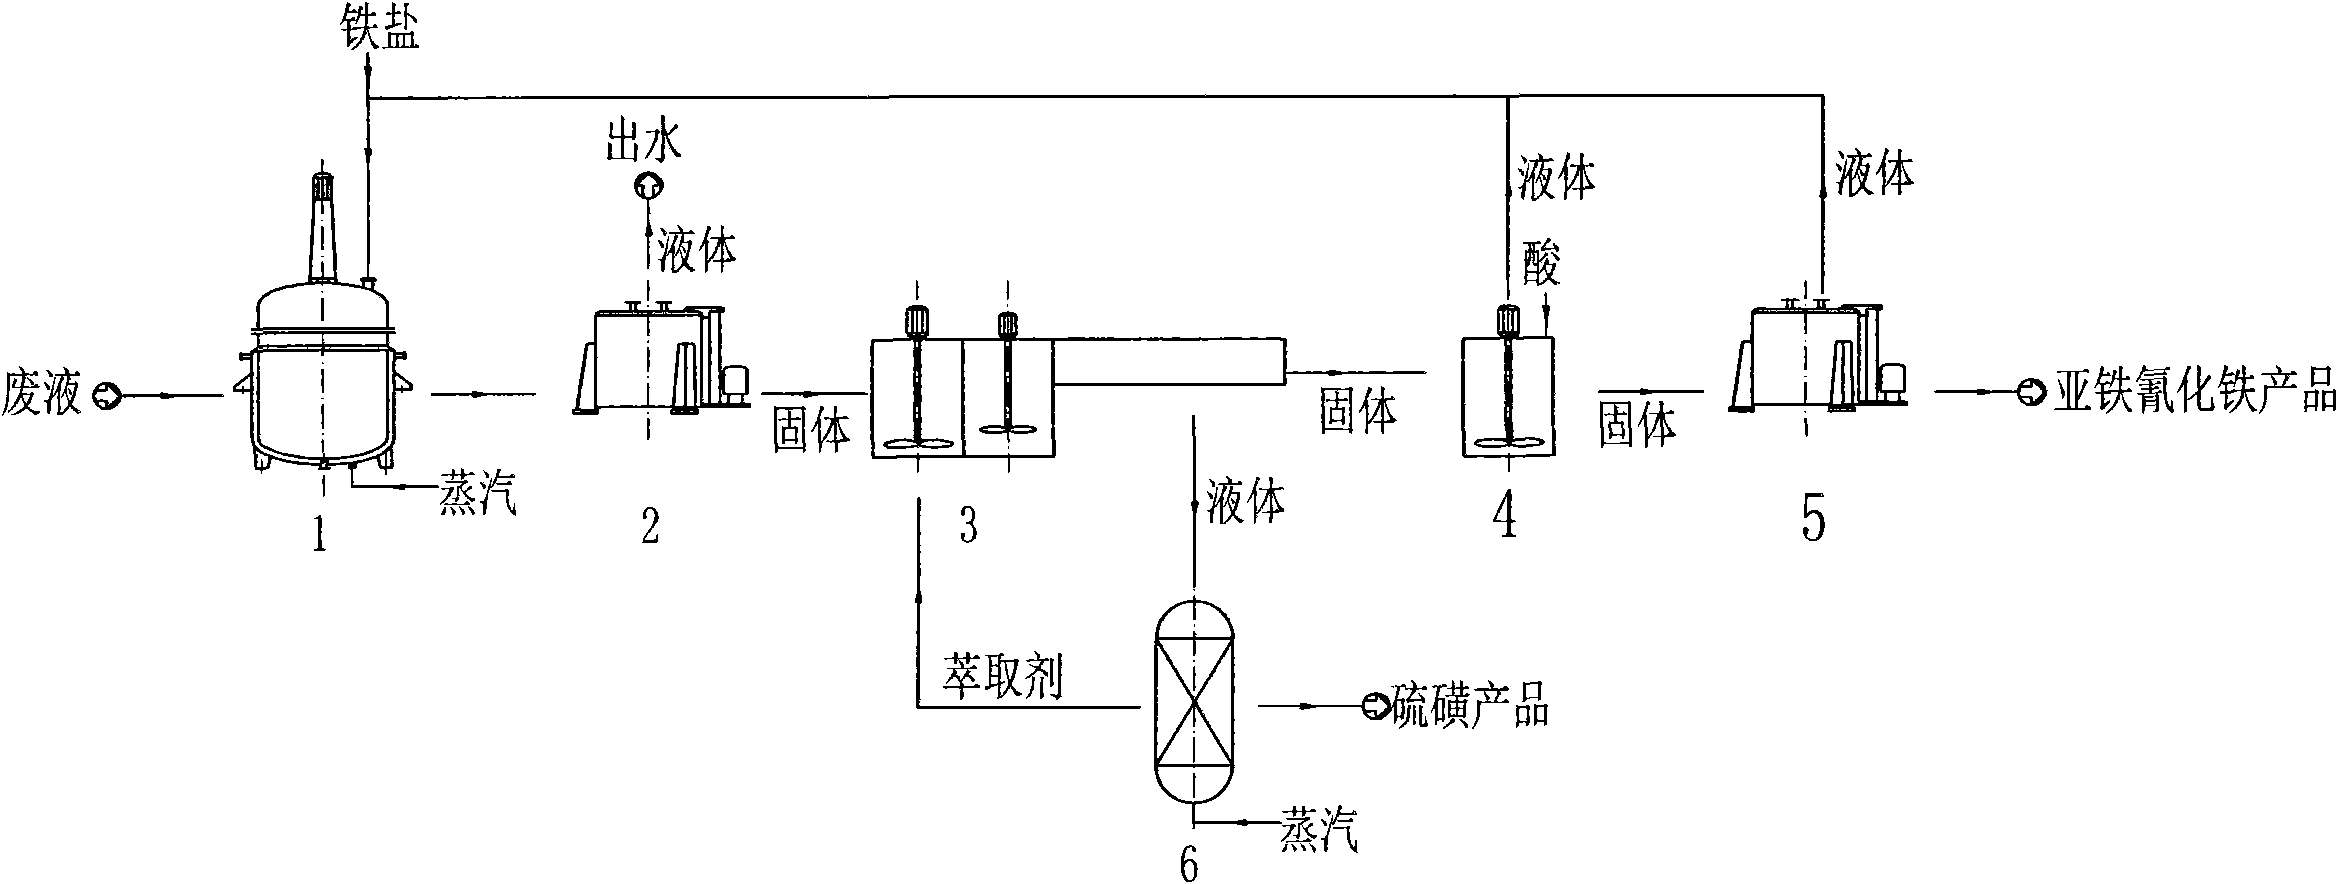 Vacuum potassium carbonate method for utilizing coke oven coal gas desulphurization and decyanation waste liquid as resource